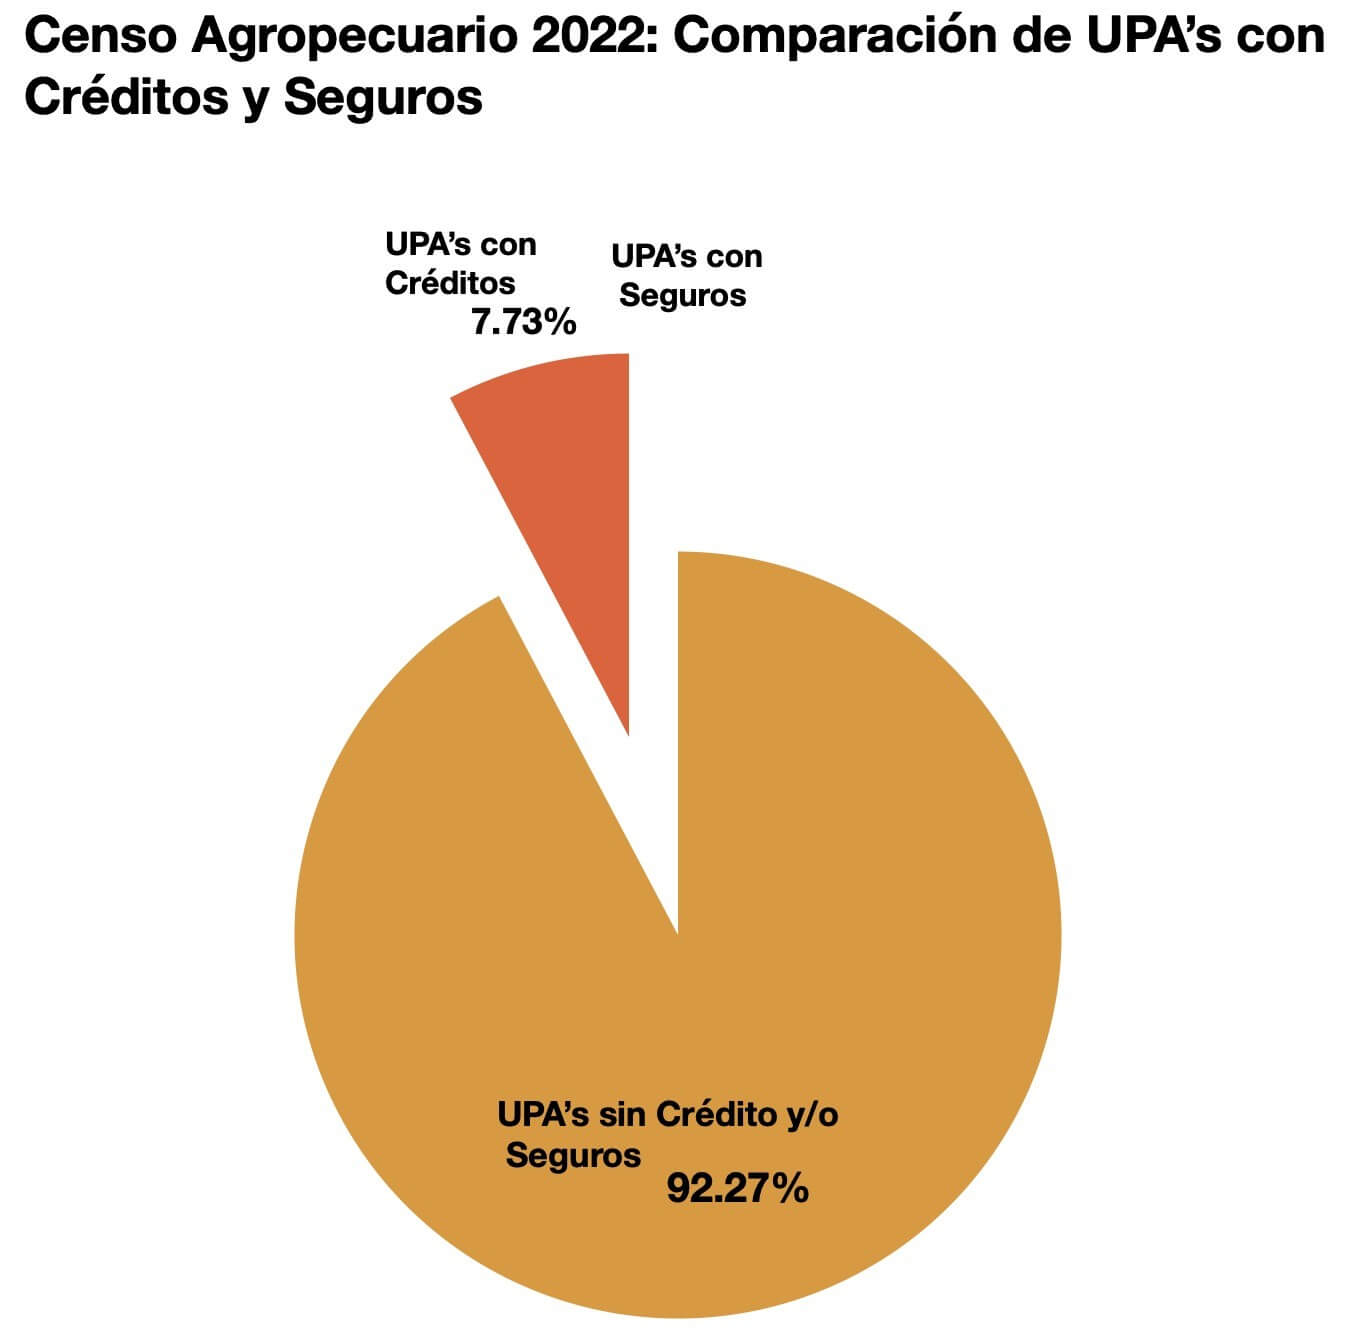 Fuente: Censo Agropecuario 2022